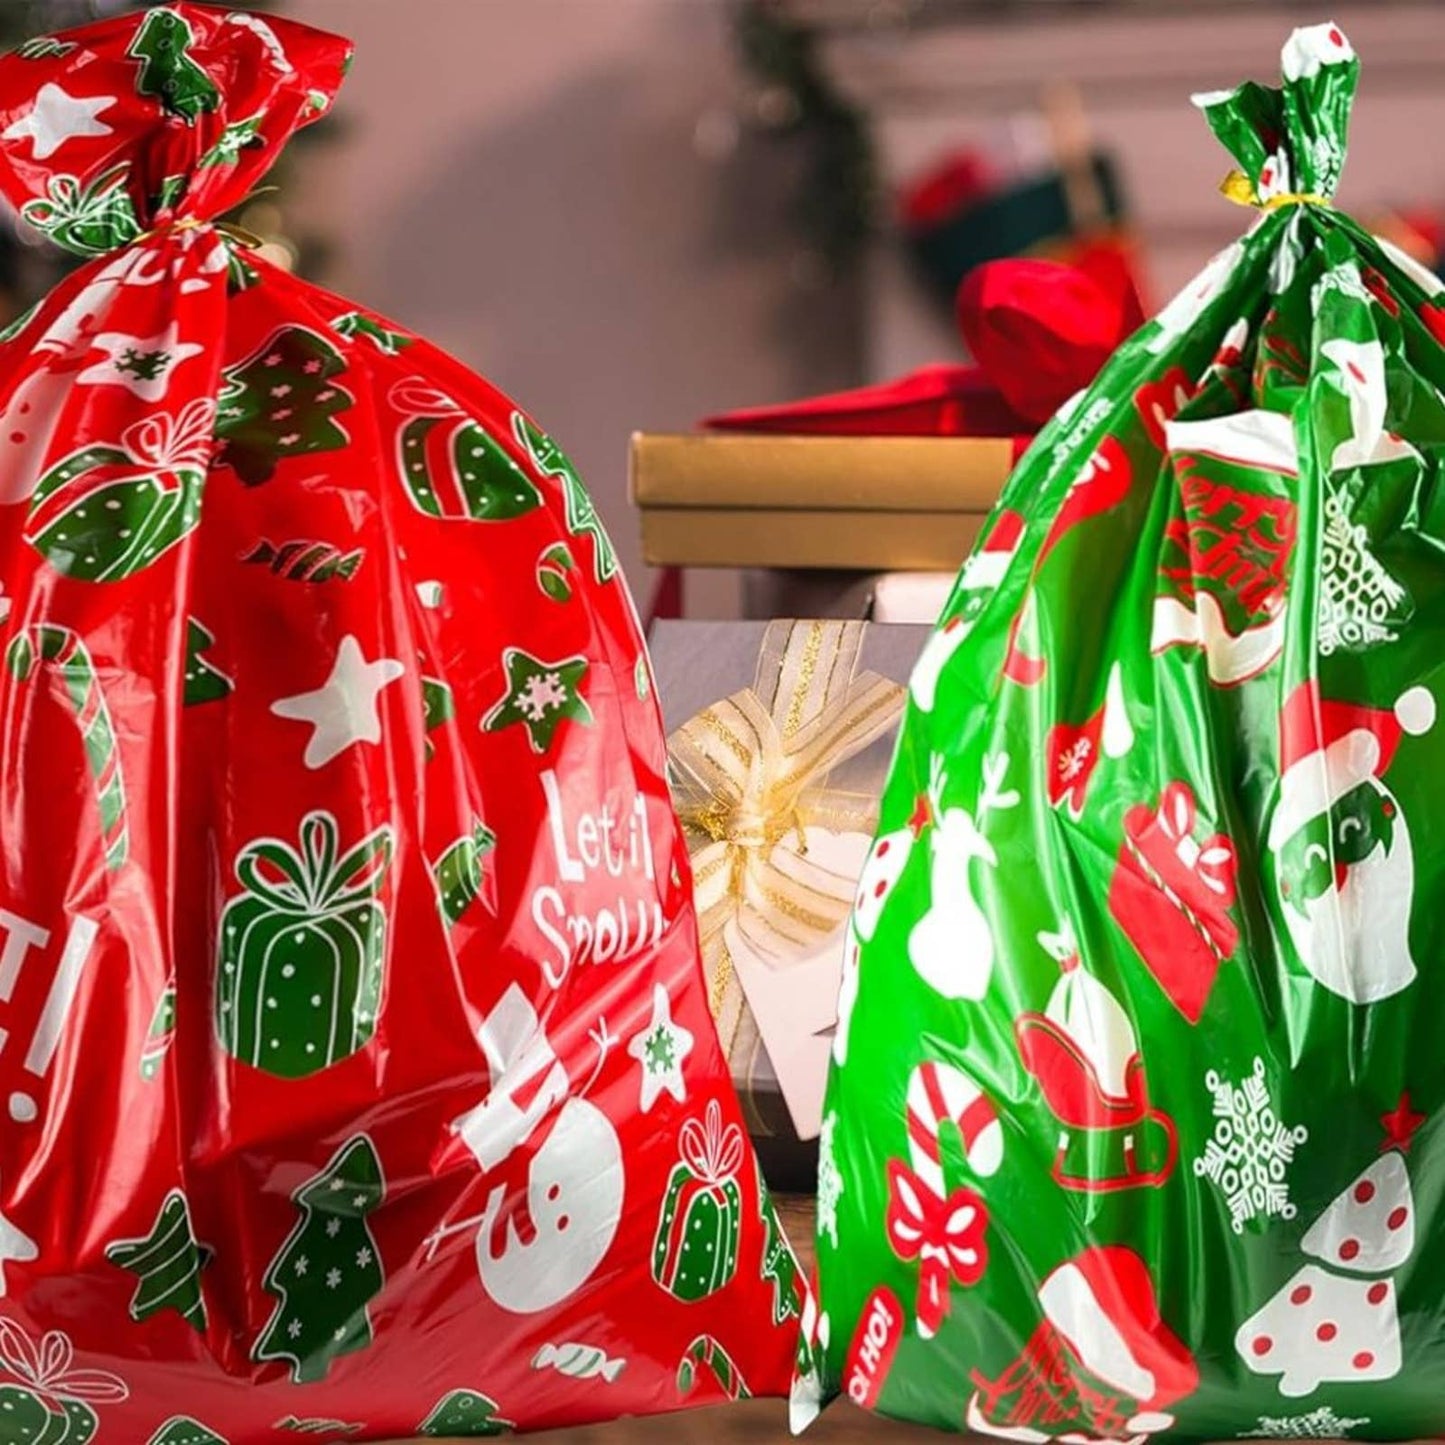 Holly LifePro Extra Large Jumbo Christmas Gift Bag 47"x36", Heavy Duty Plastic